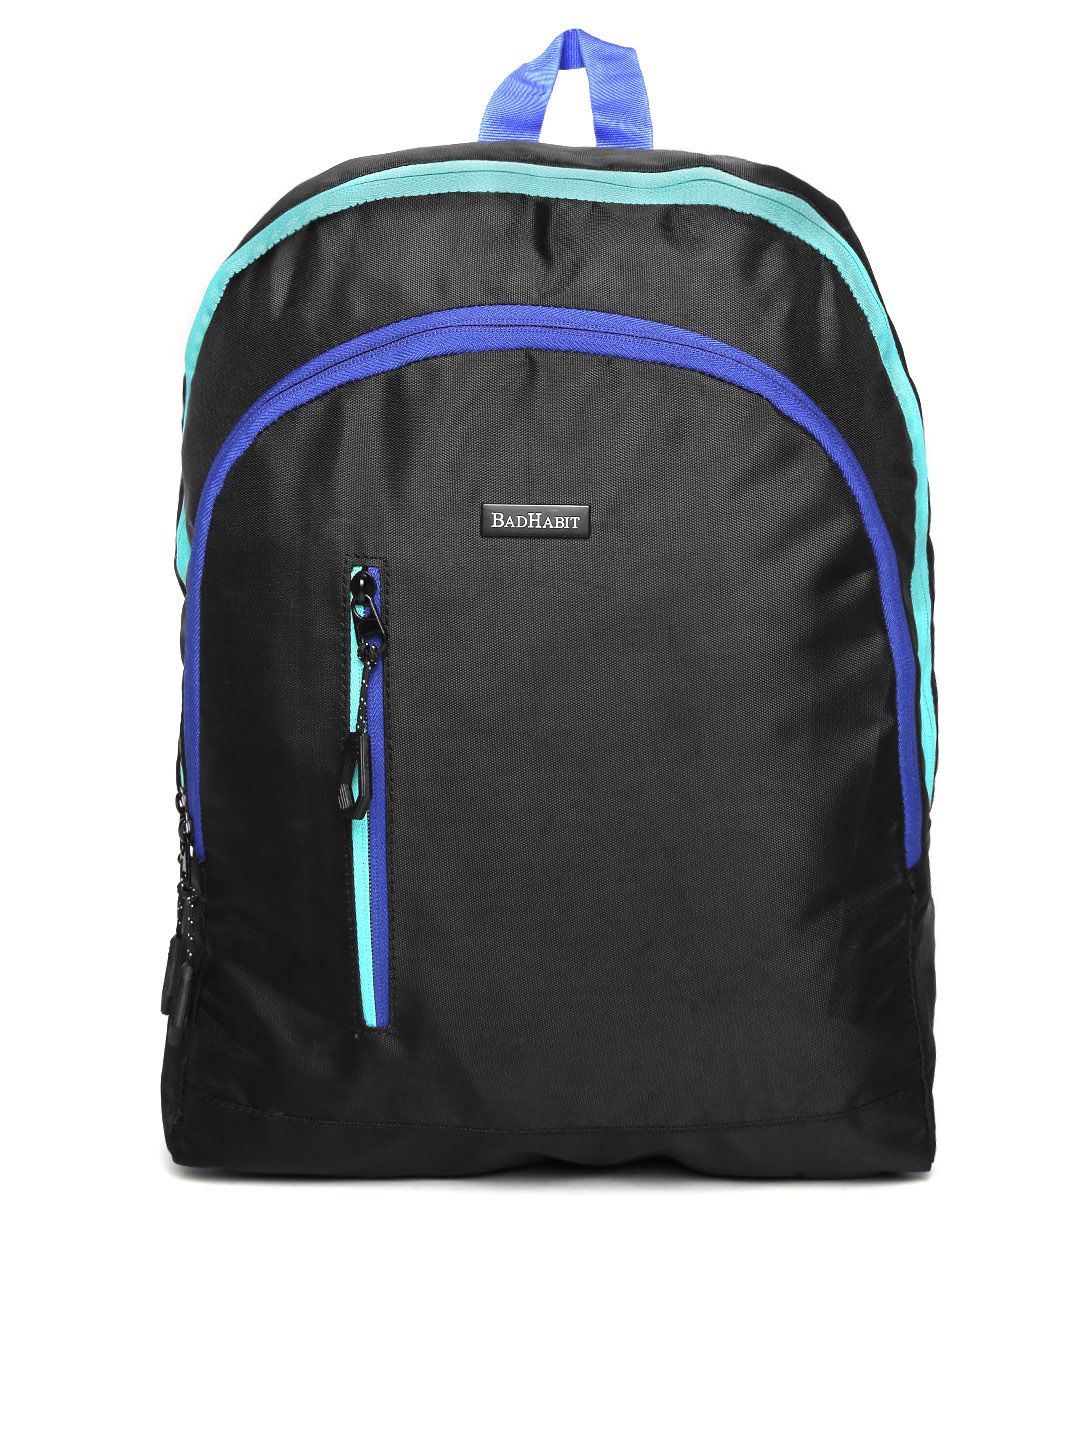 BAD HABIT Unisex Black Solid Backpack Price in India